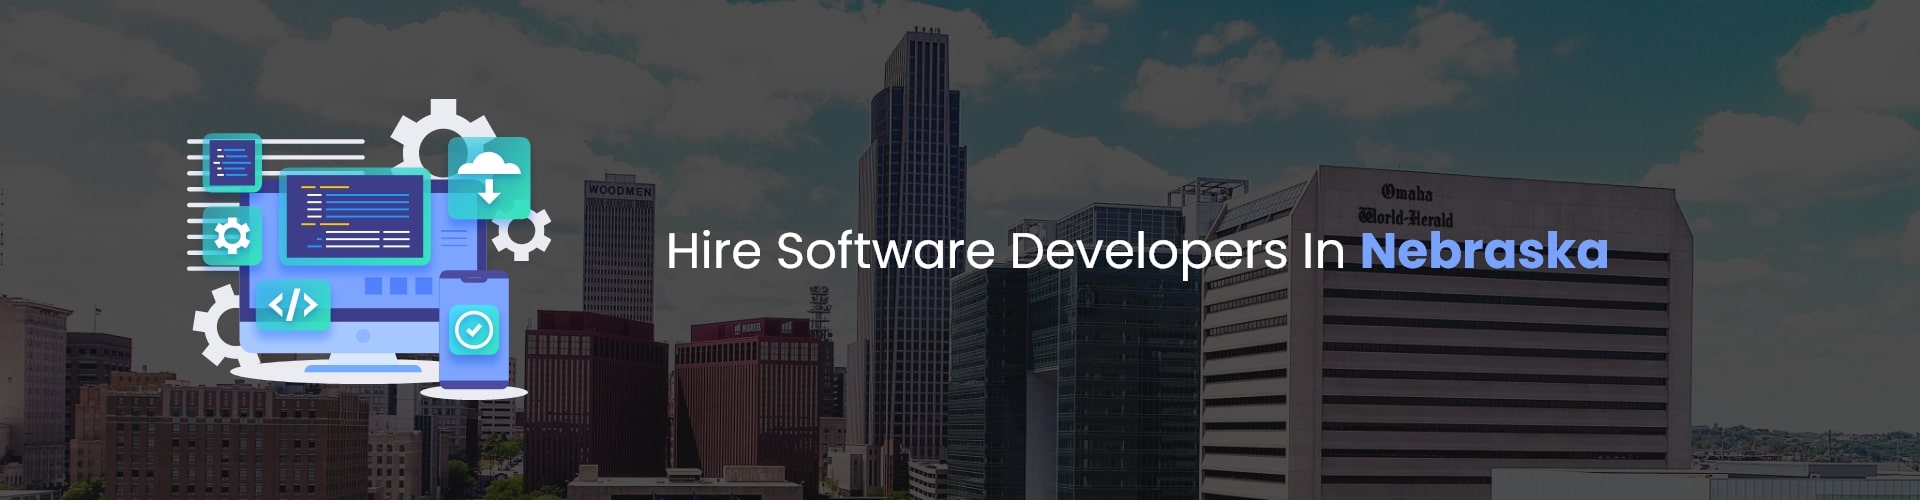 hire software developers in nebraska